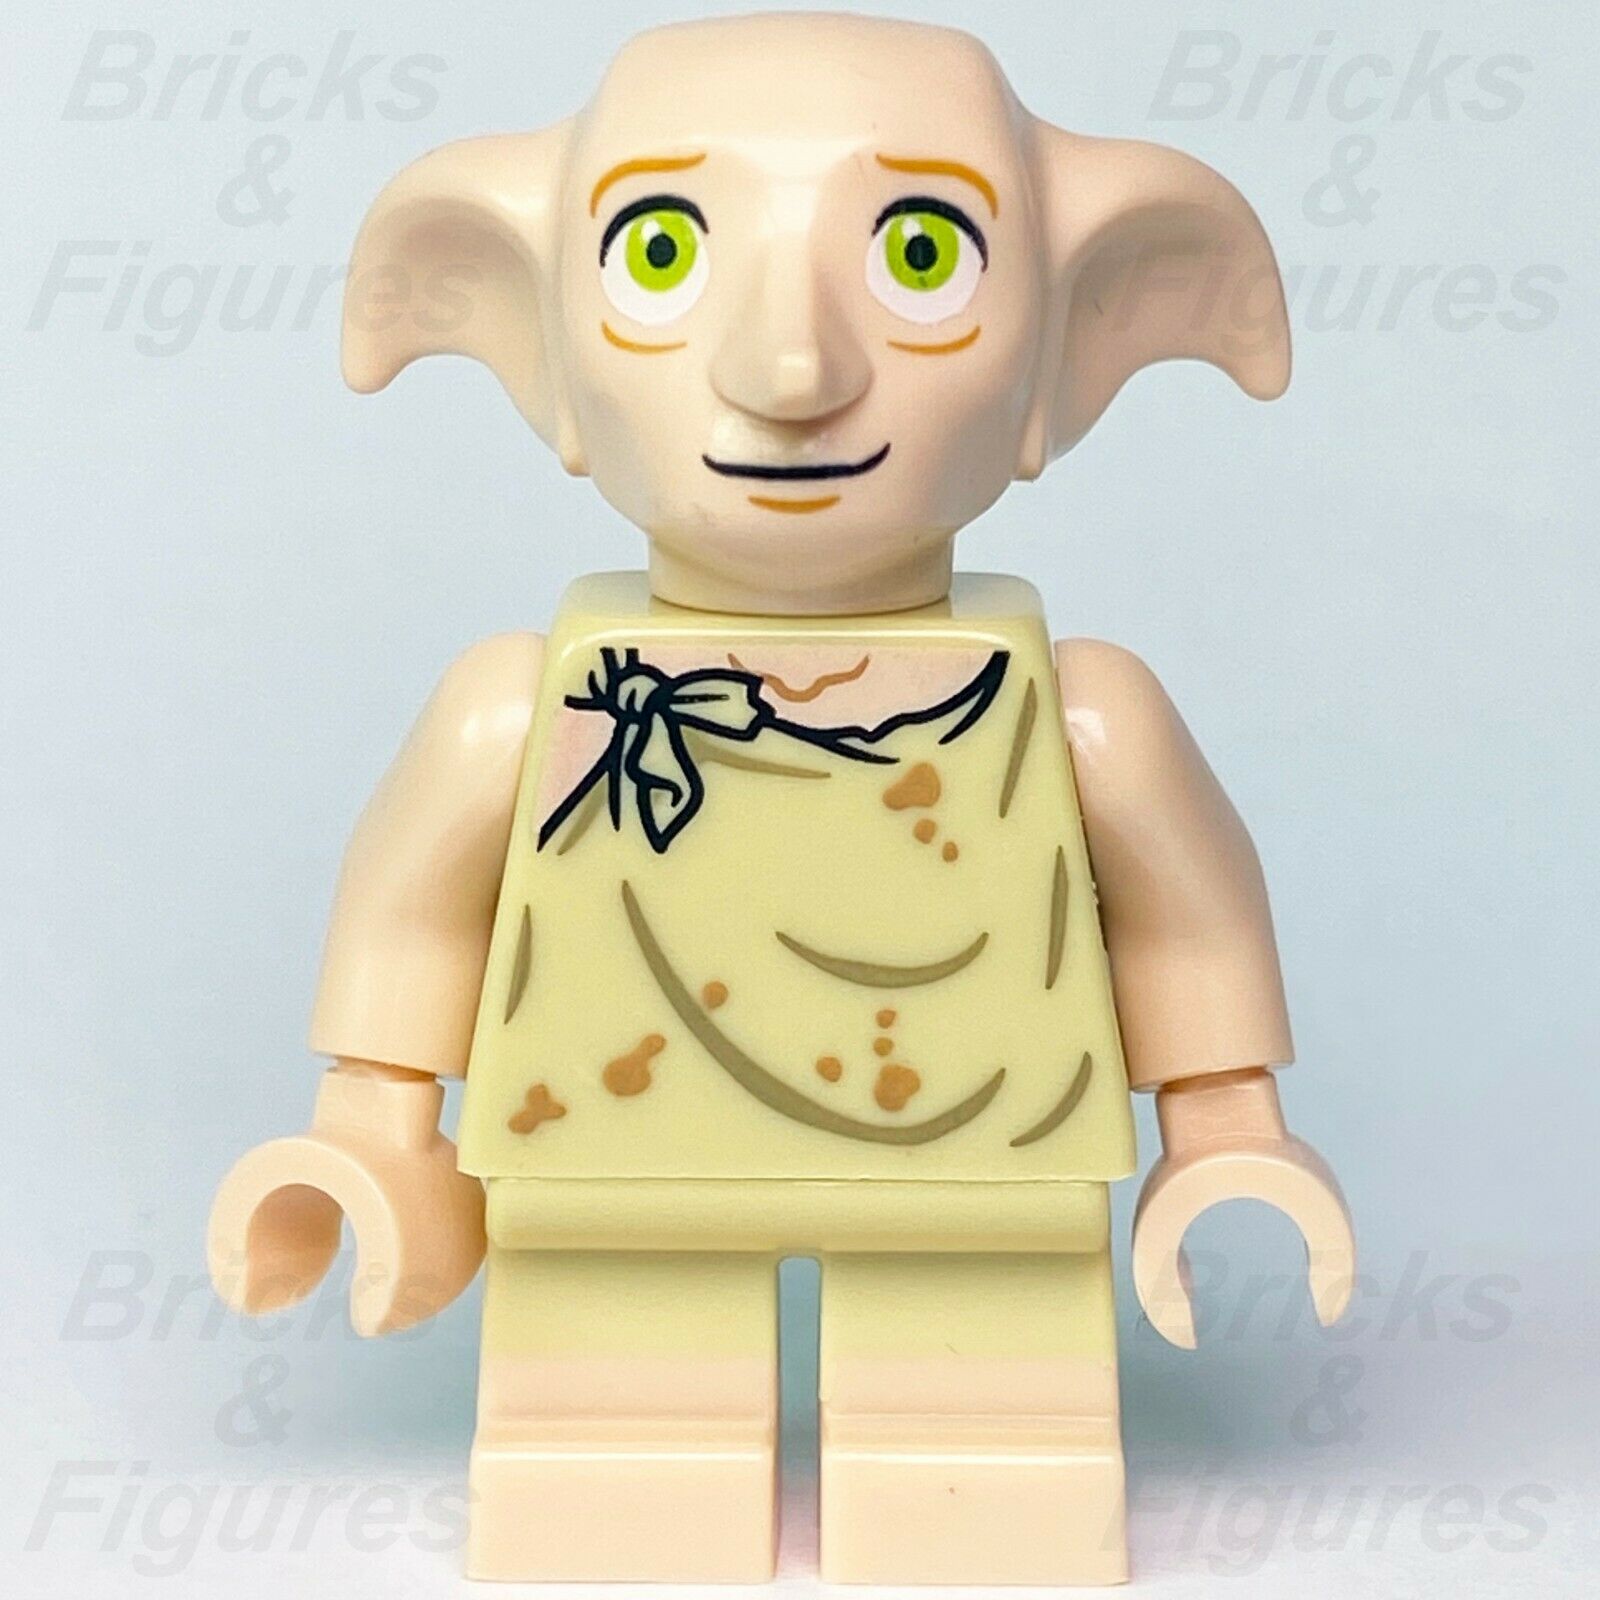 LEGO Harry Potter Dobby the House Elf Collectible Minifigures 71022 - Bricks & Figures